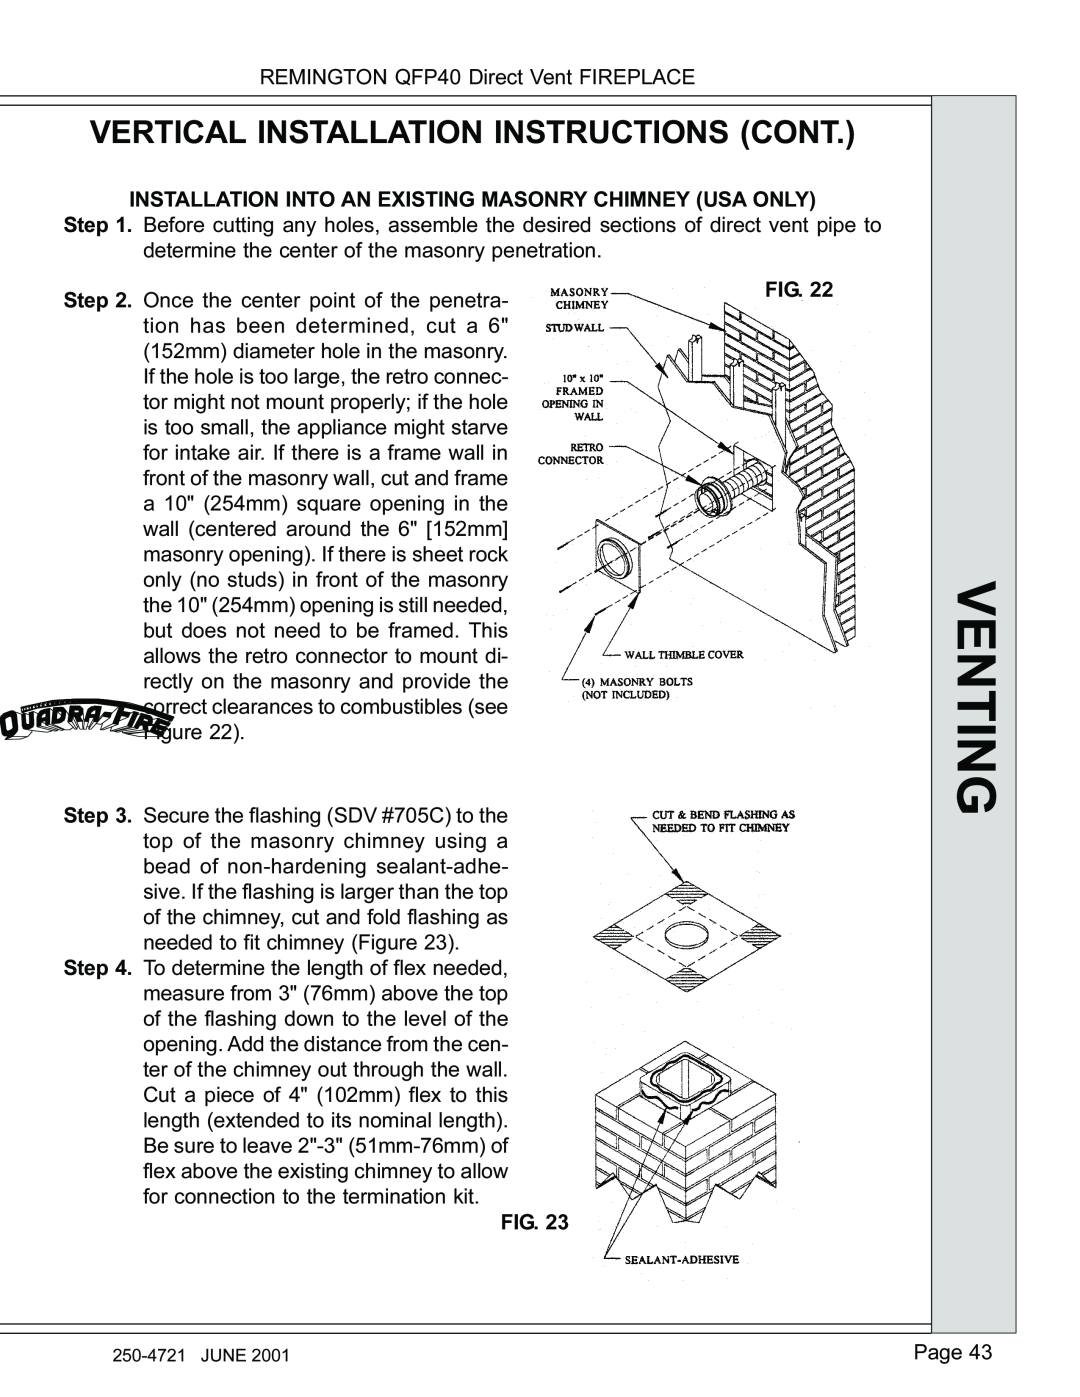 Remington manual Venting, Vertical Installation Instructions Cont, REMINGTON QFP40 Direct Vent FIREPLACE 